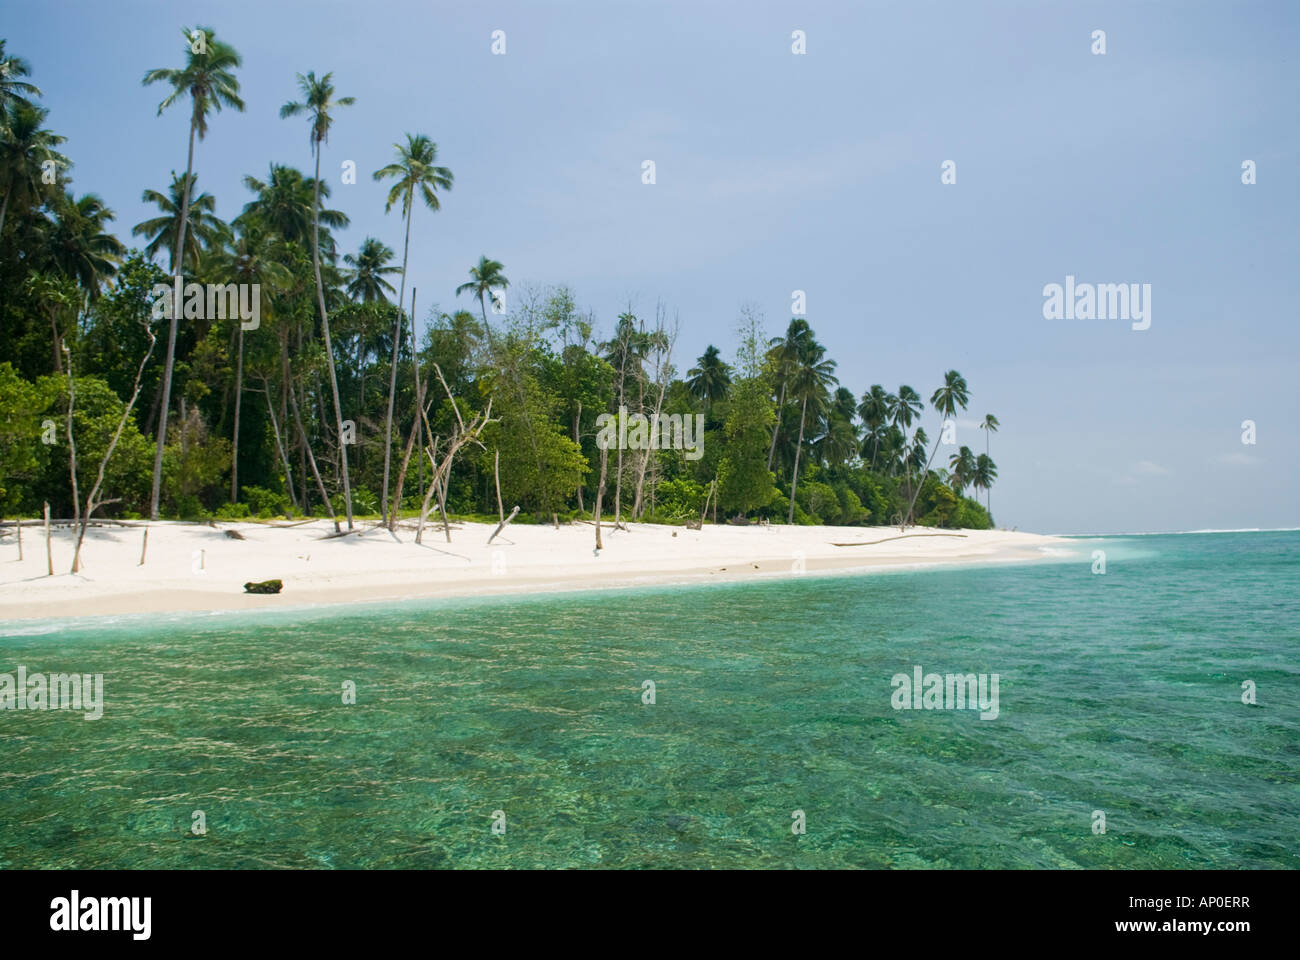 Pulau Pittojat Mentawai Islands Indonesia Stock Photo - Alamy